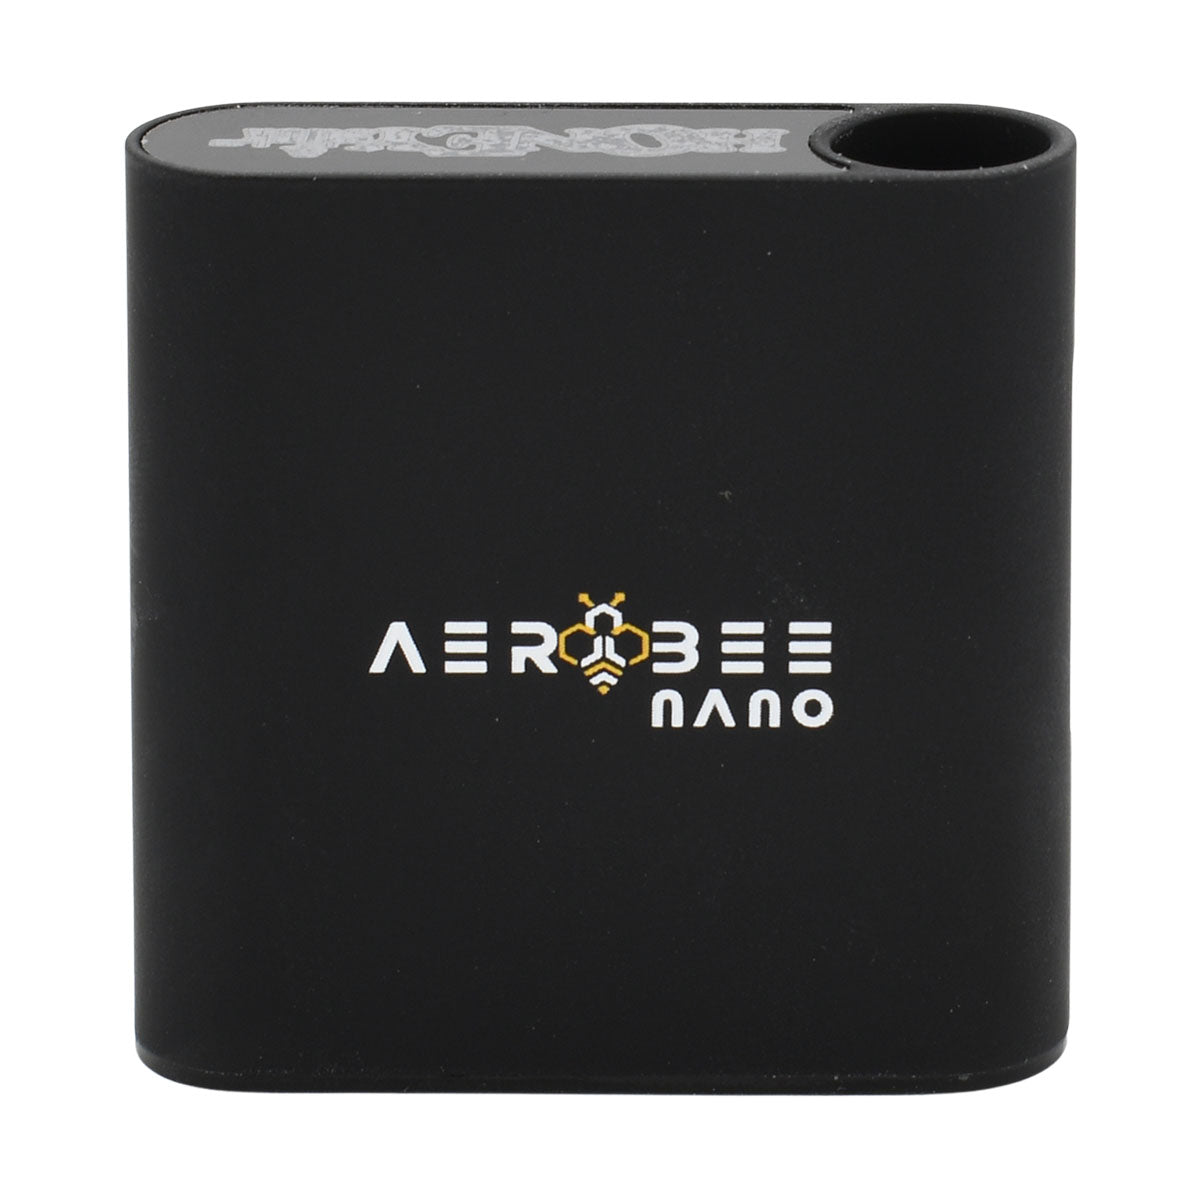 Aerobee Cartridge Battery Side View showing Logo